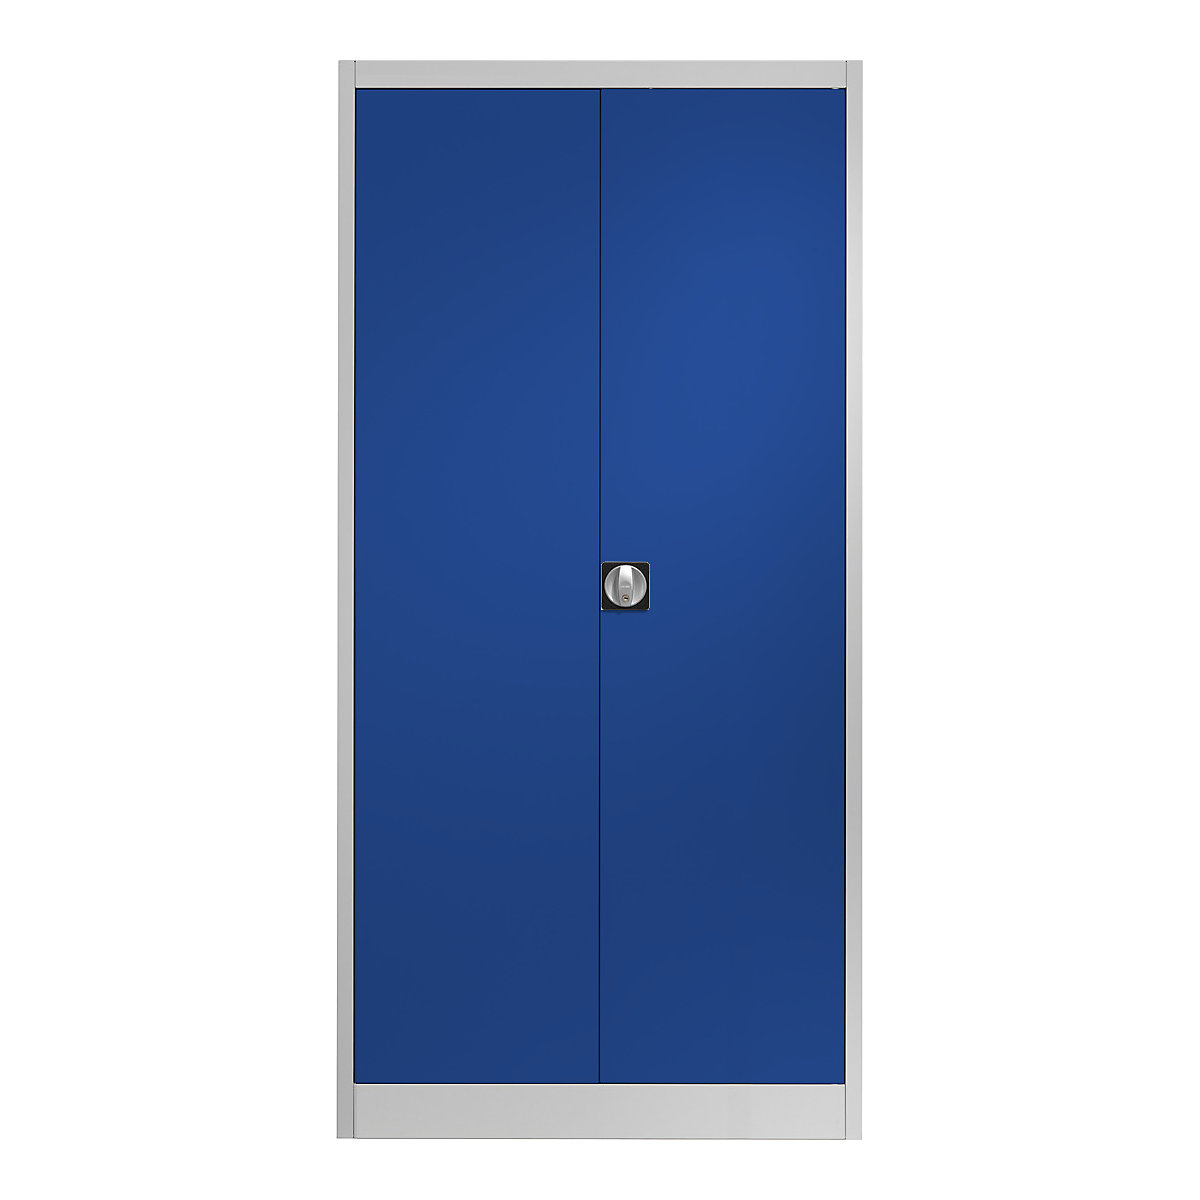 Jeklena omara s krilnimi vrati – mauser, 4 police, G 420 mm, svetlo siva / ultramarin modra, od 2 kosov-6